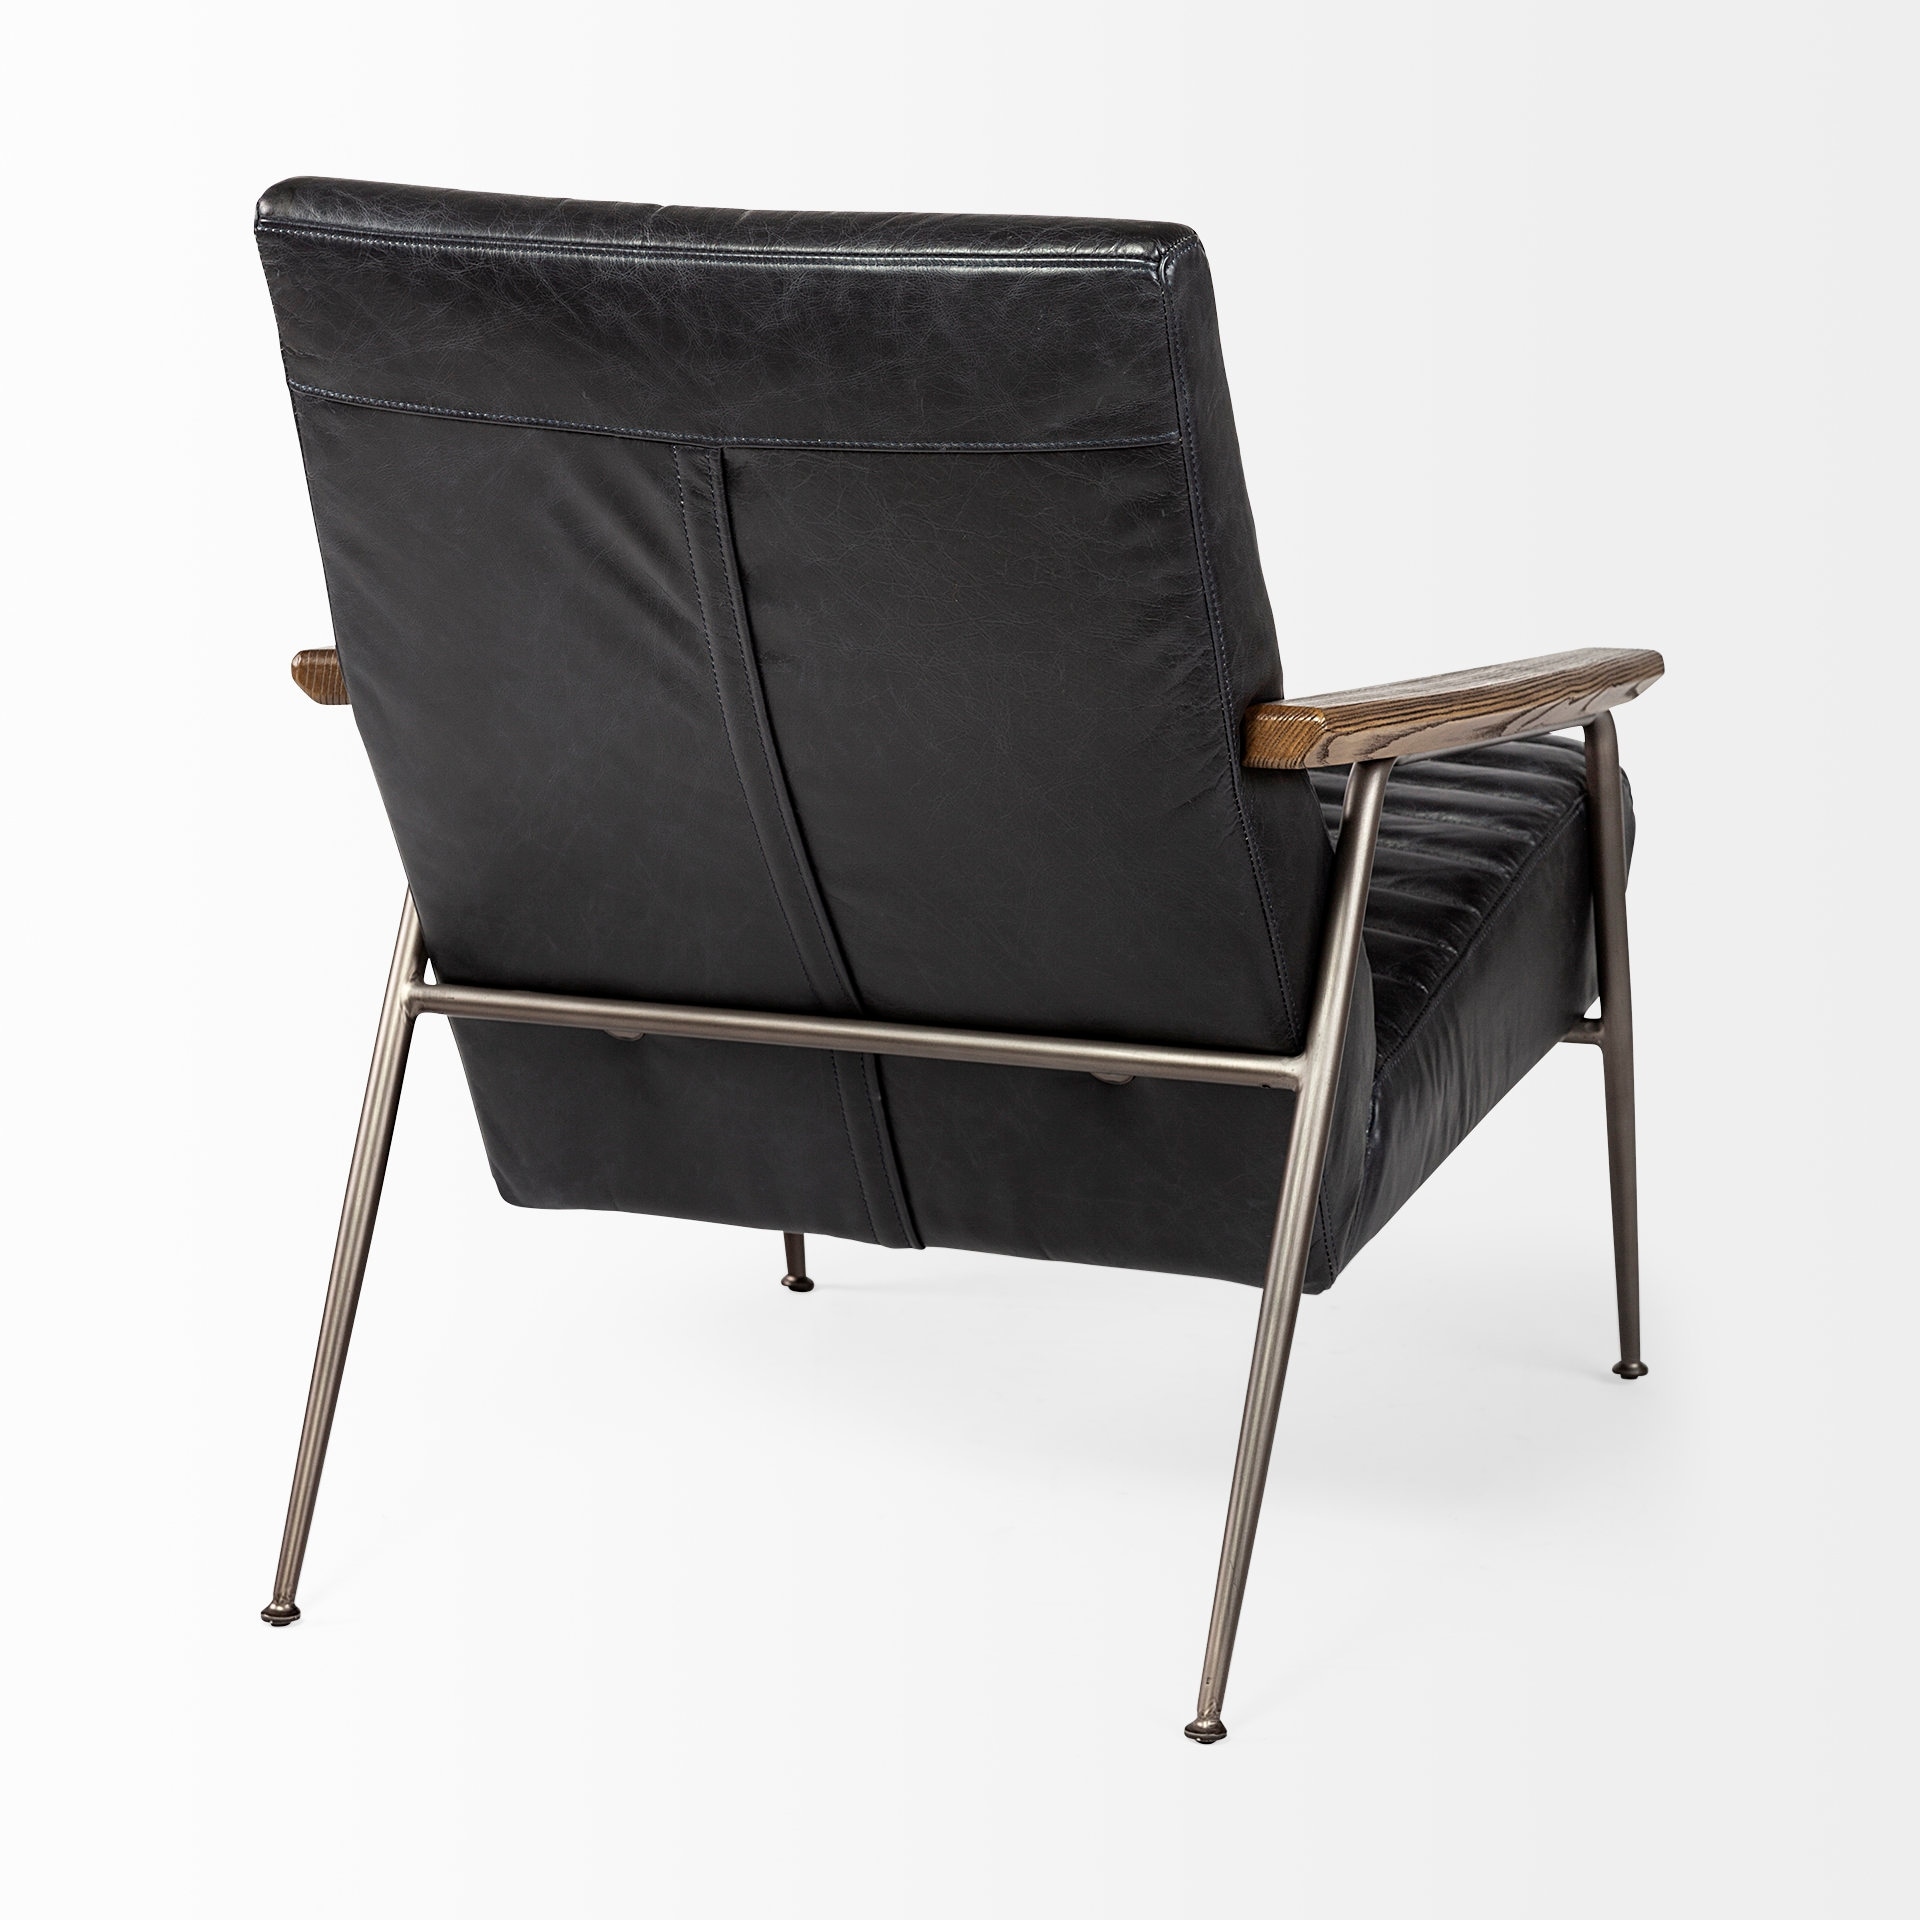 Grosjean Leather Wrap Metal Frame Accent Chair